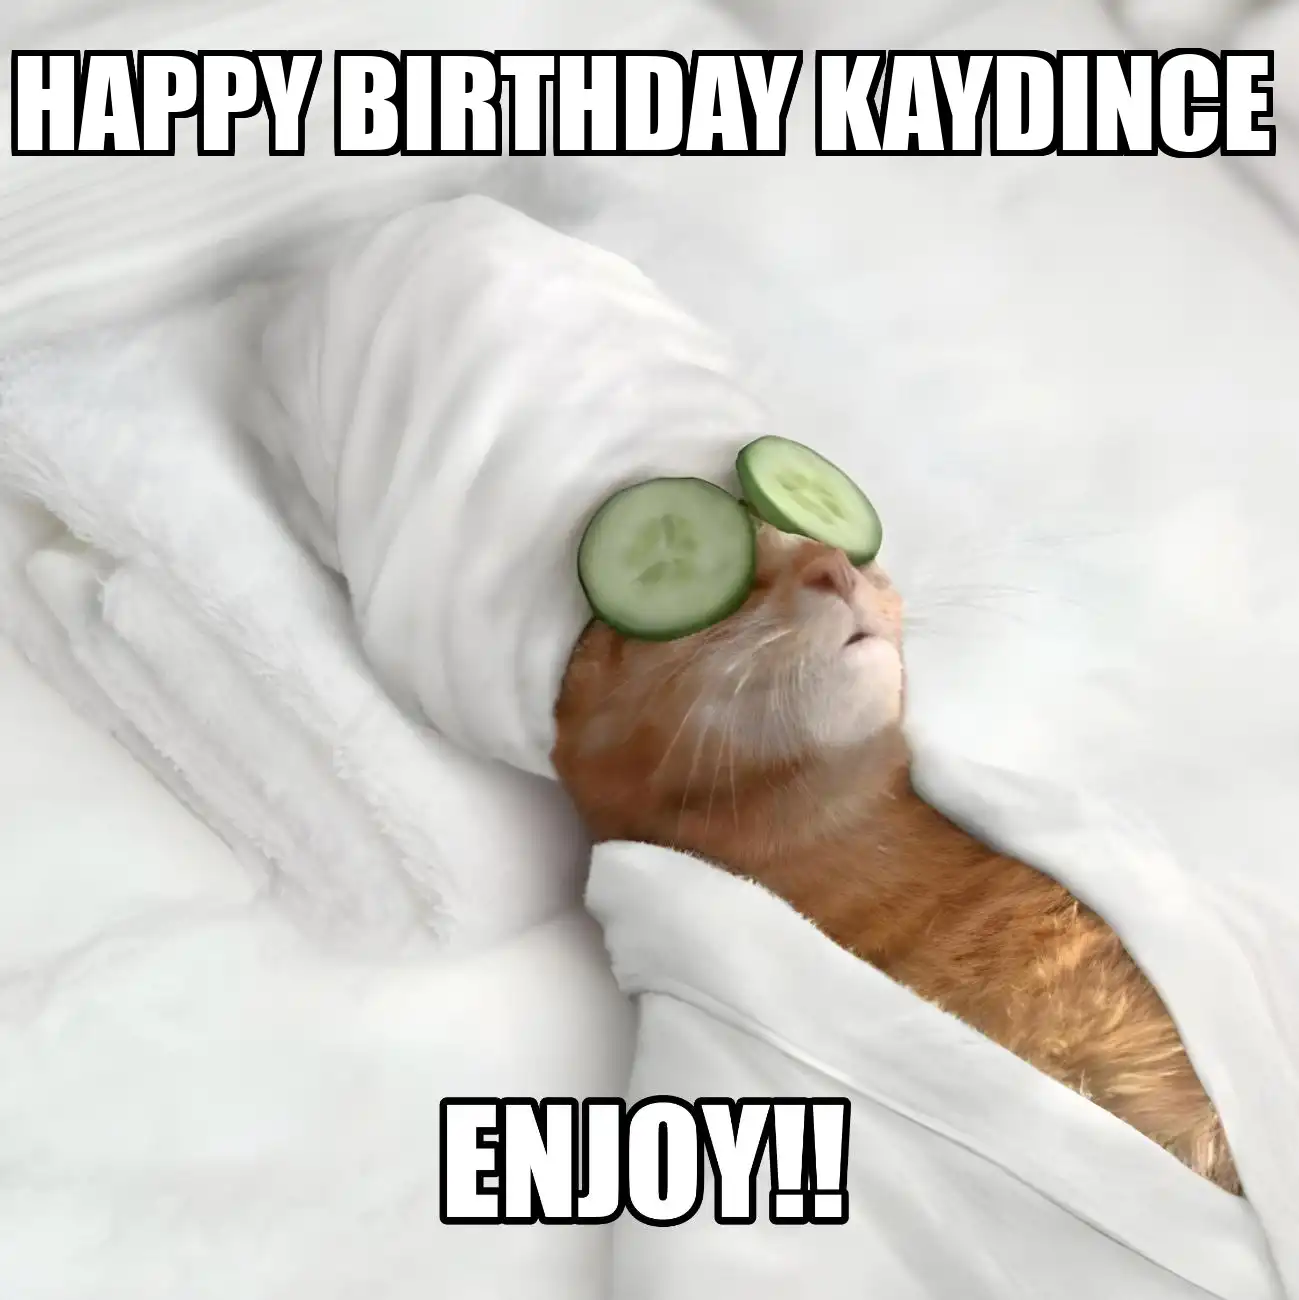 Happy Birthday Kaydince Enjoy Cat Meme